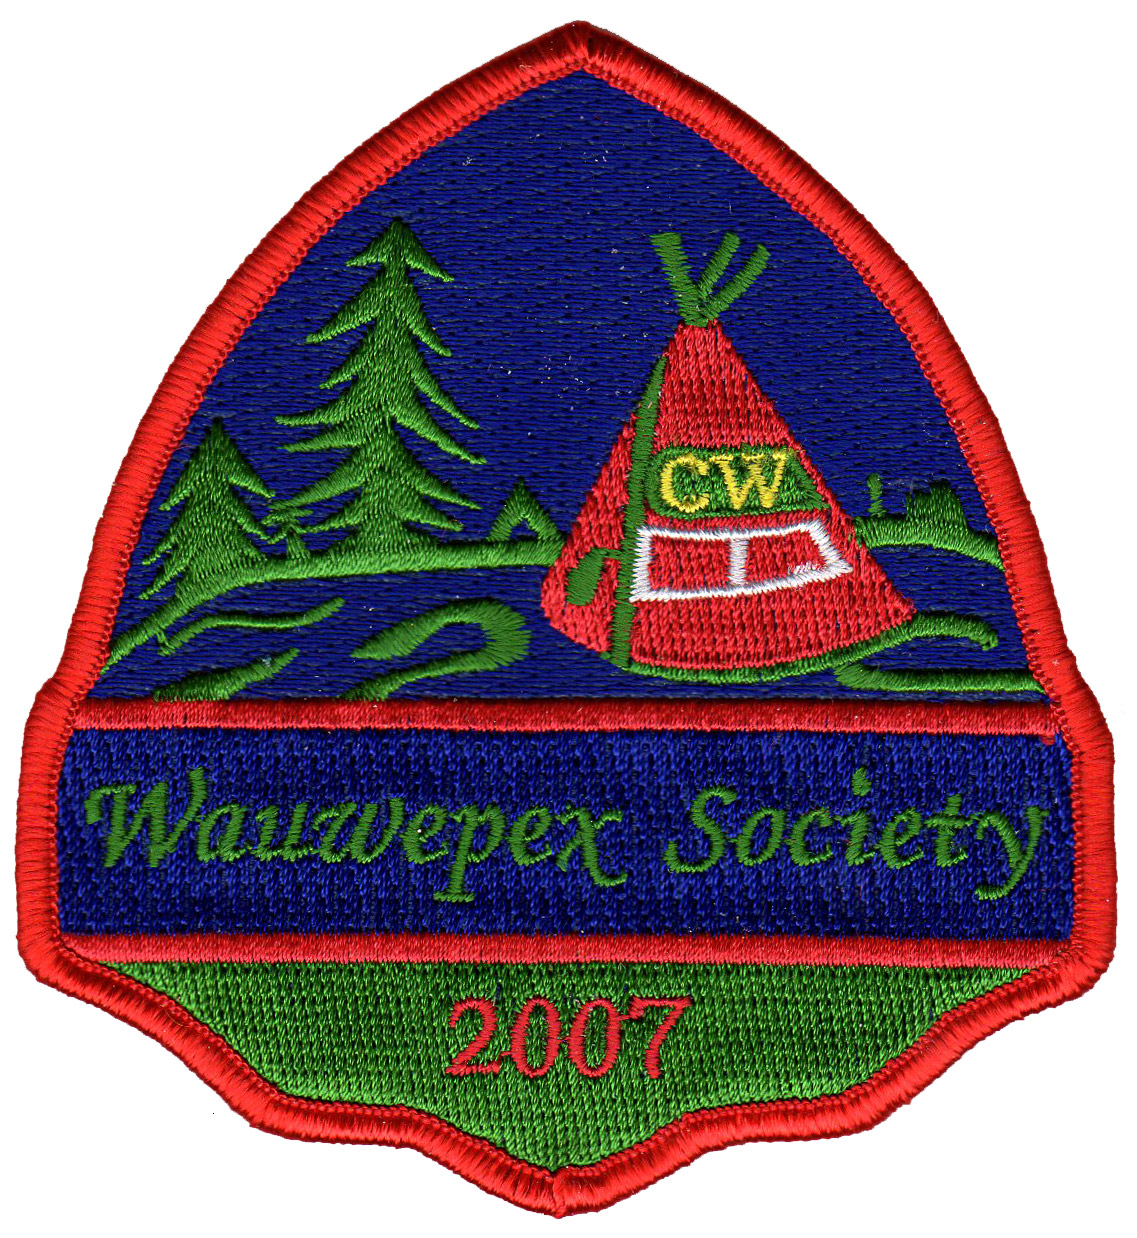 2007 membership patch